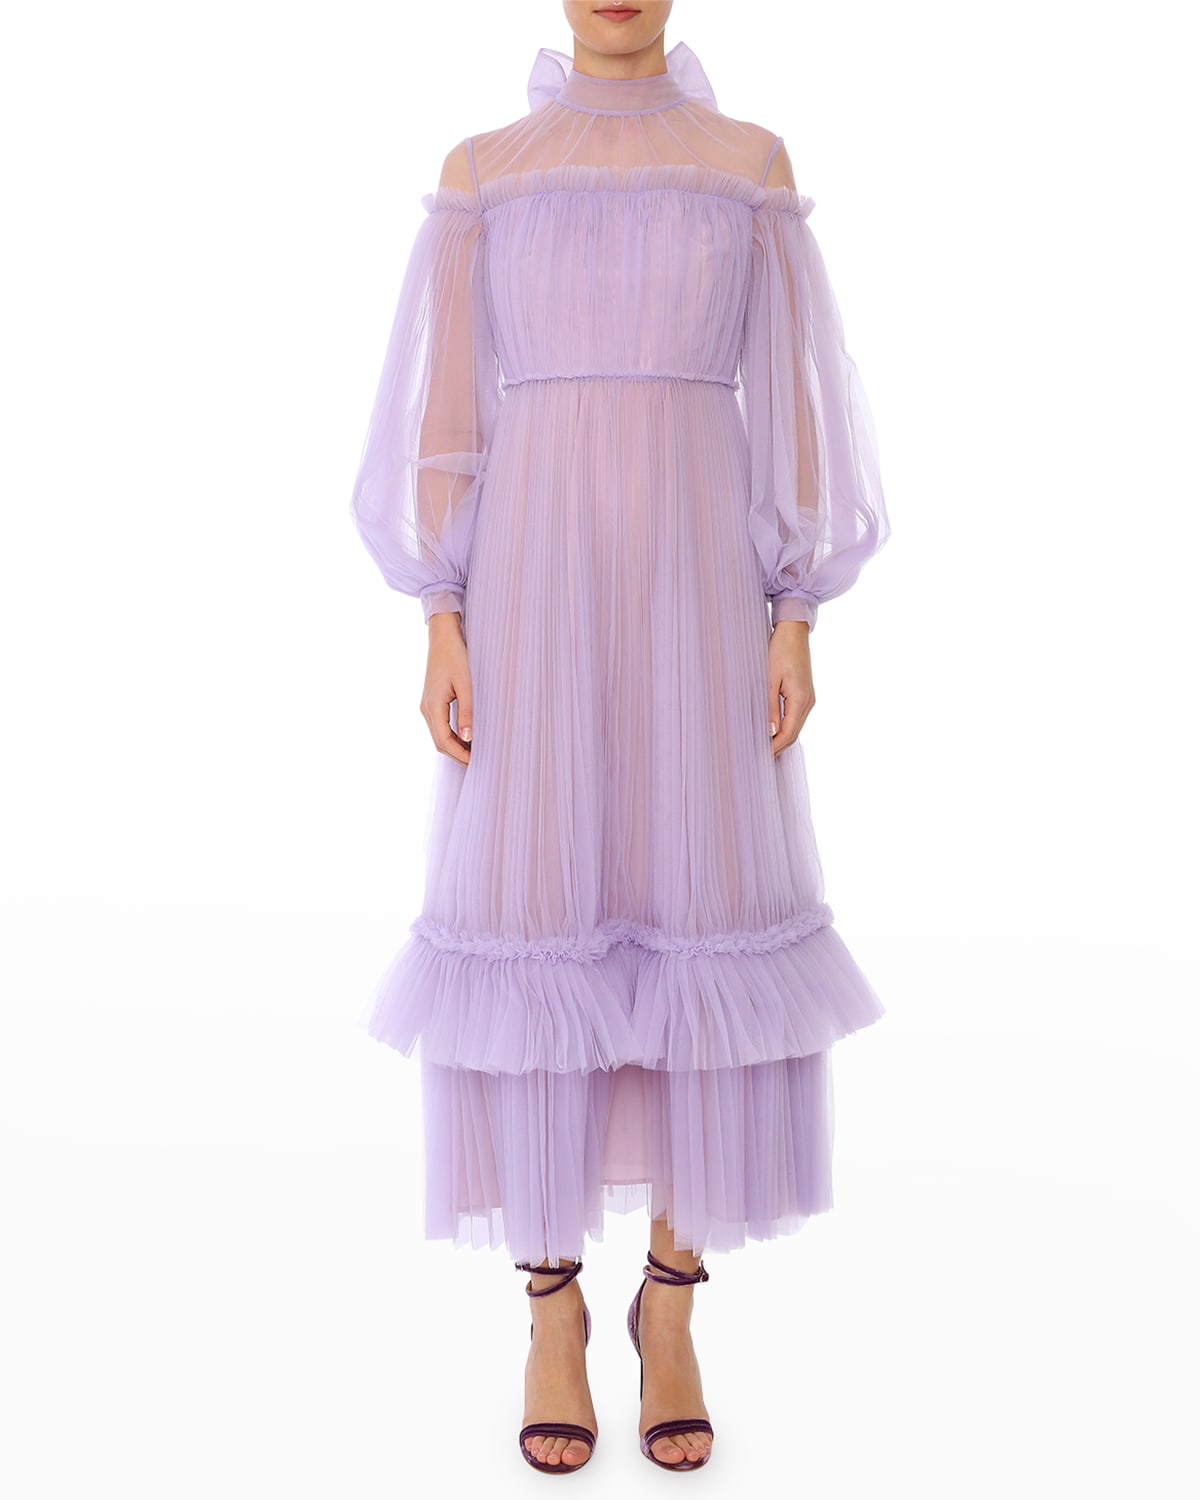 Alicia Tulle Tiered Dress | Neiman Marcus